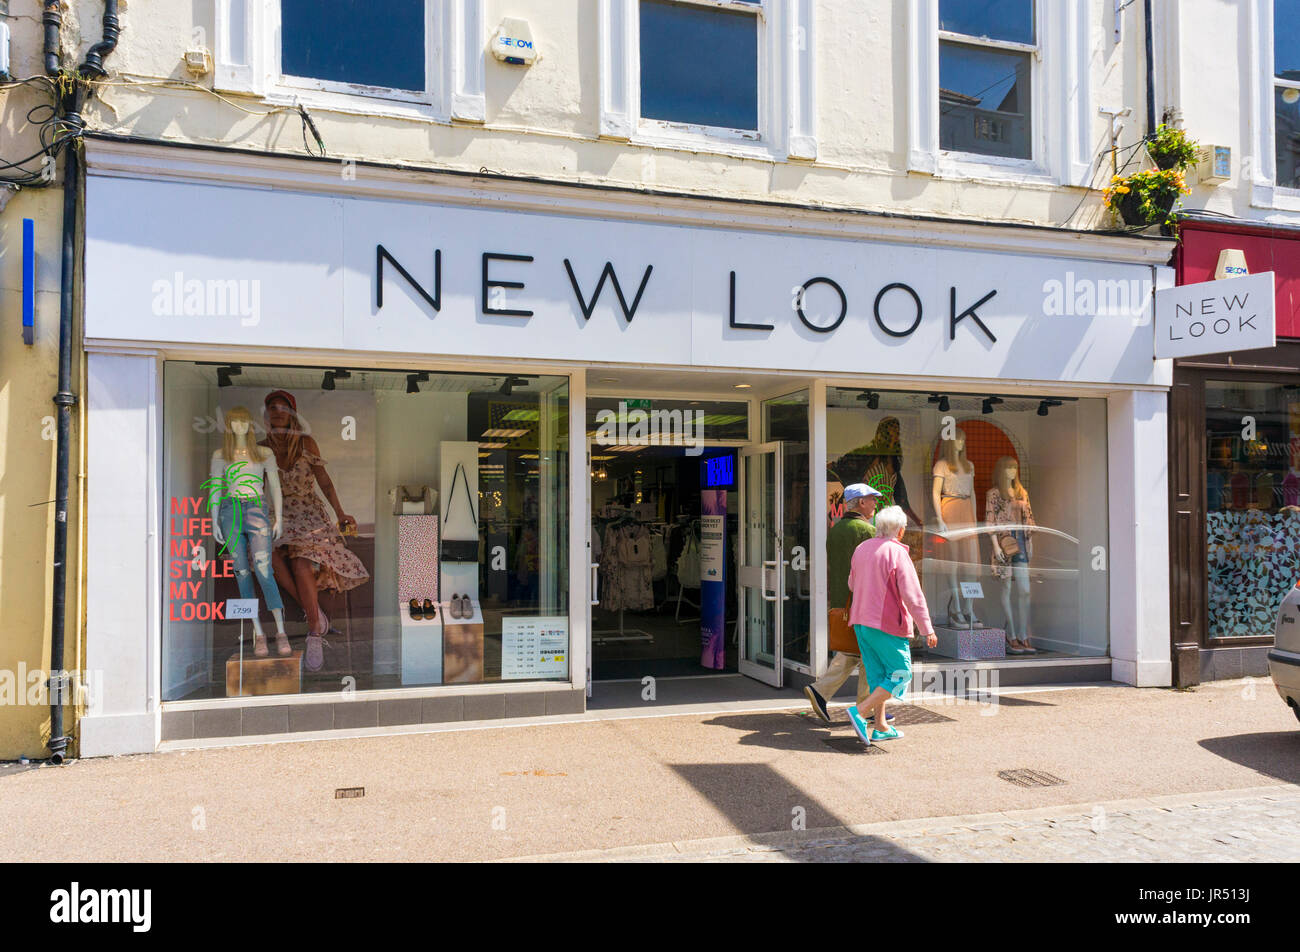 New Look clothing store, England, UK Stock Photo